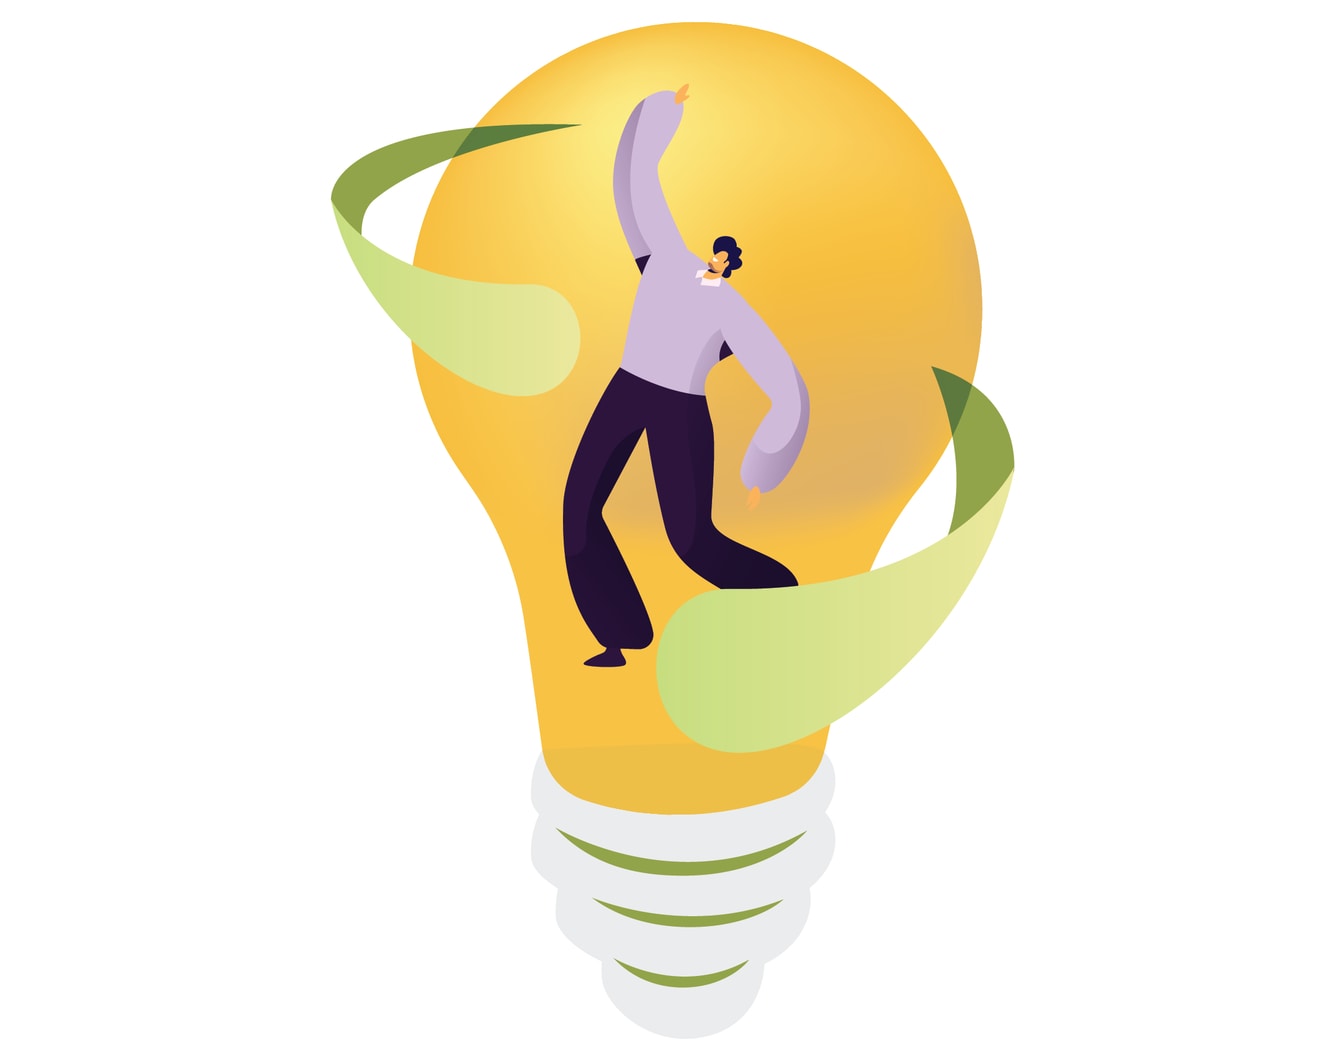 Illustration of man twisting a lamp.